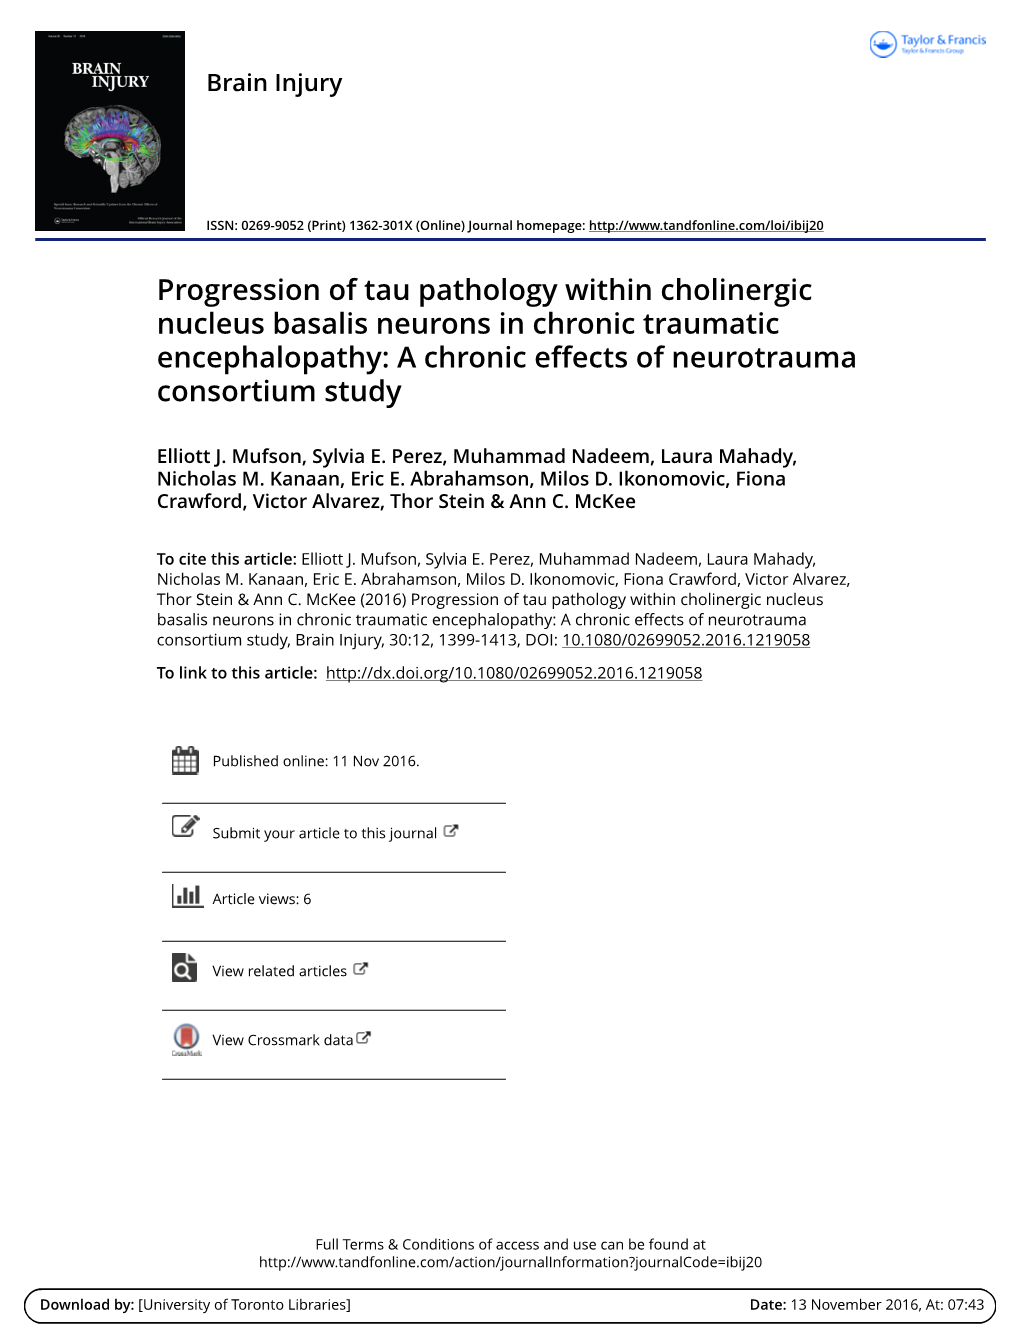 Progression of Tau Pathology Within Cholinergic Nucleus Basalis Neurons in Chronic Traumatic Encephalopathy: a Chronic Effects of Neurotrauma Consortium Study